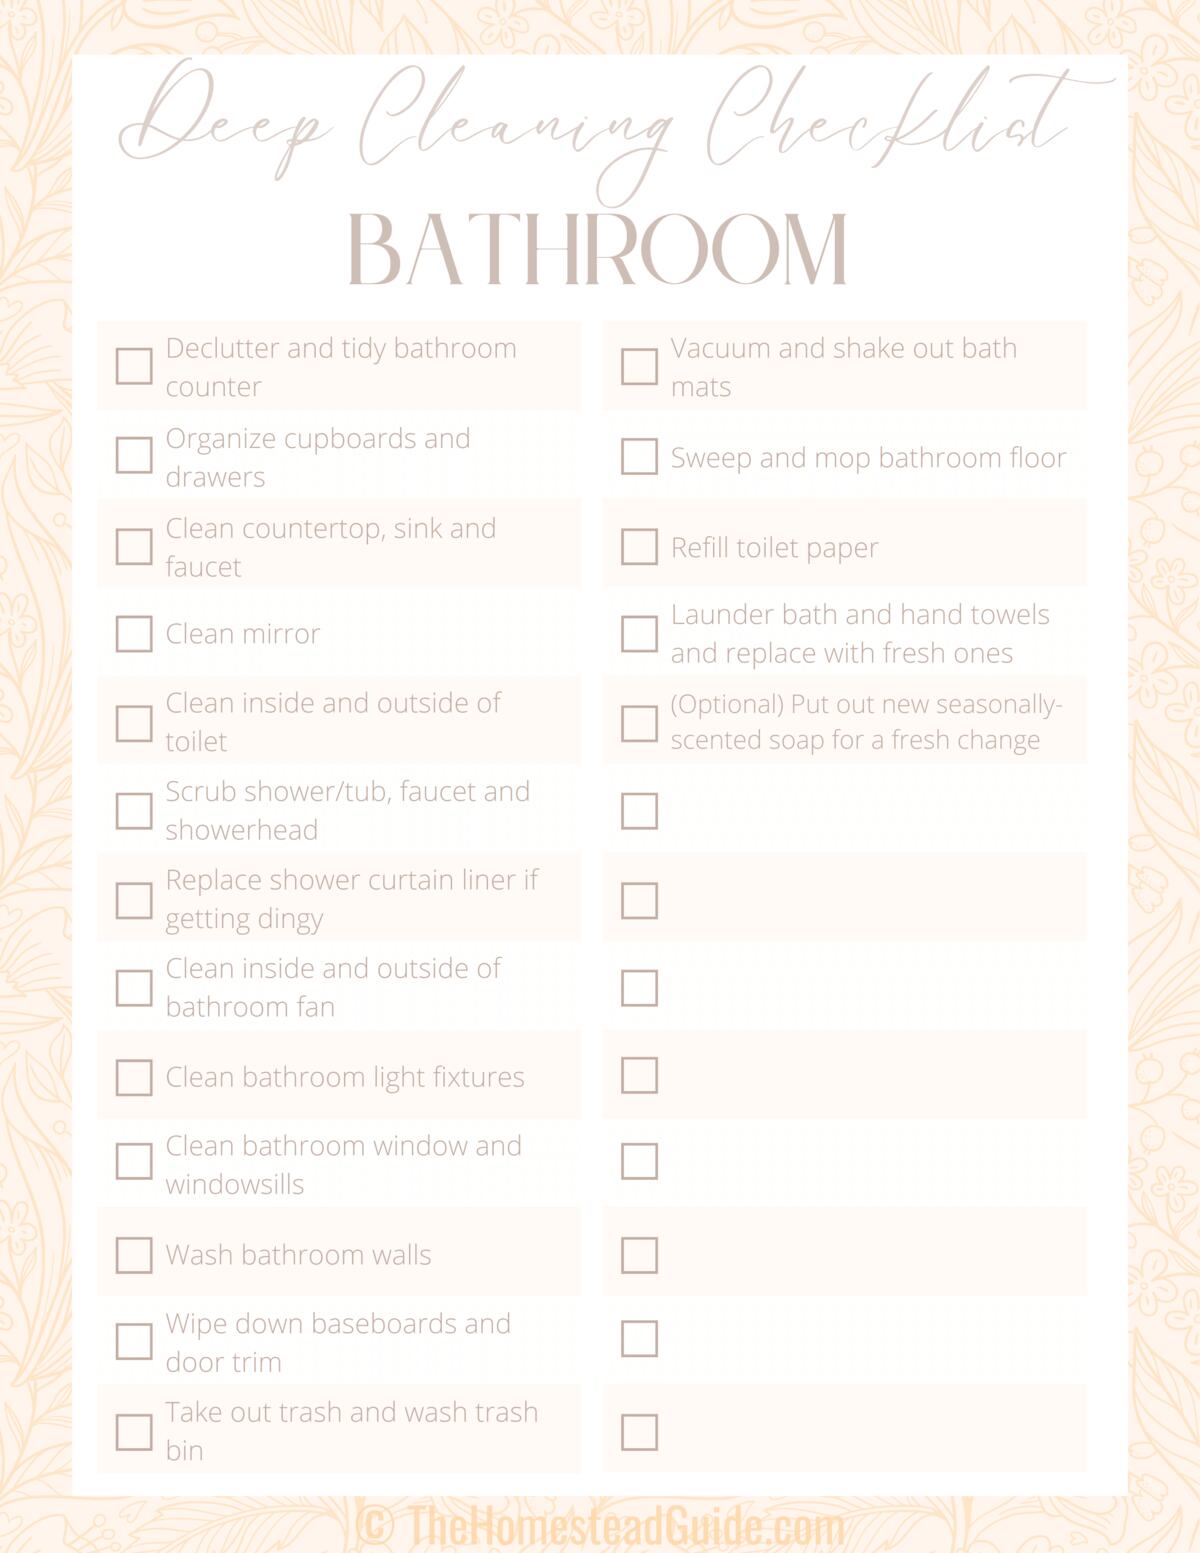 Whole Home Deep Cleaning Checklist - Bathroom